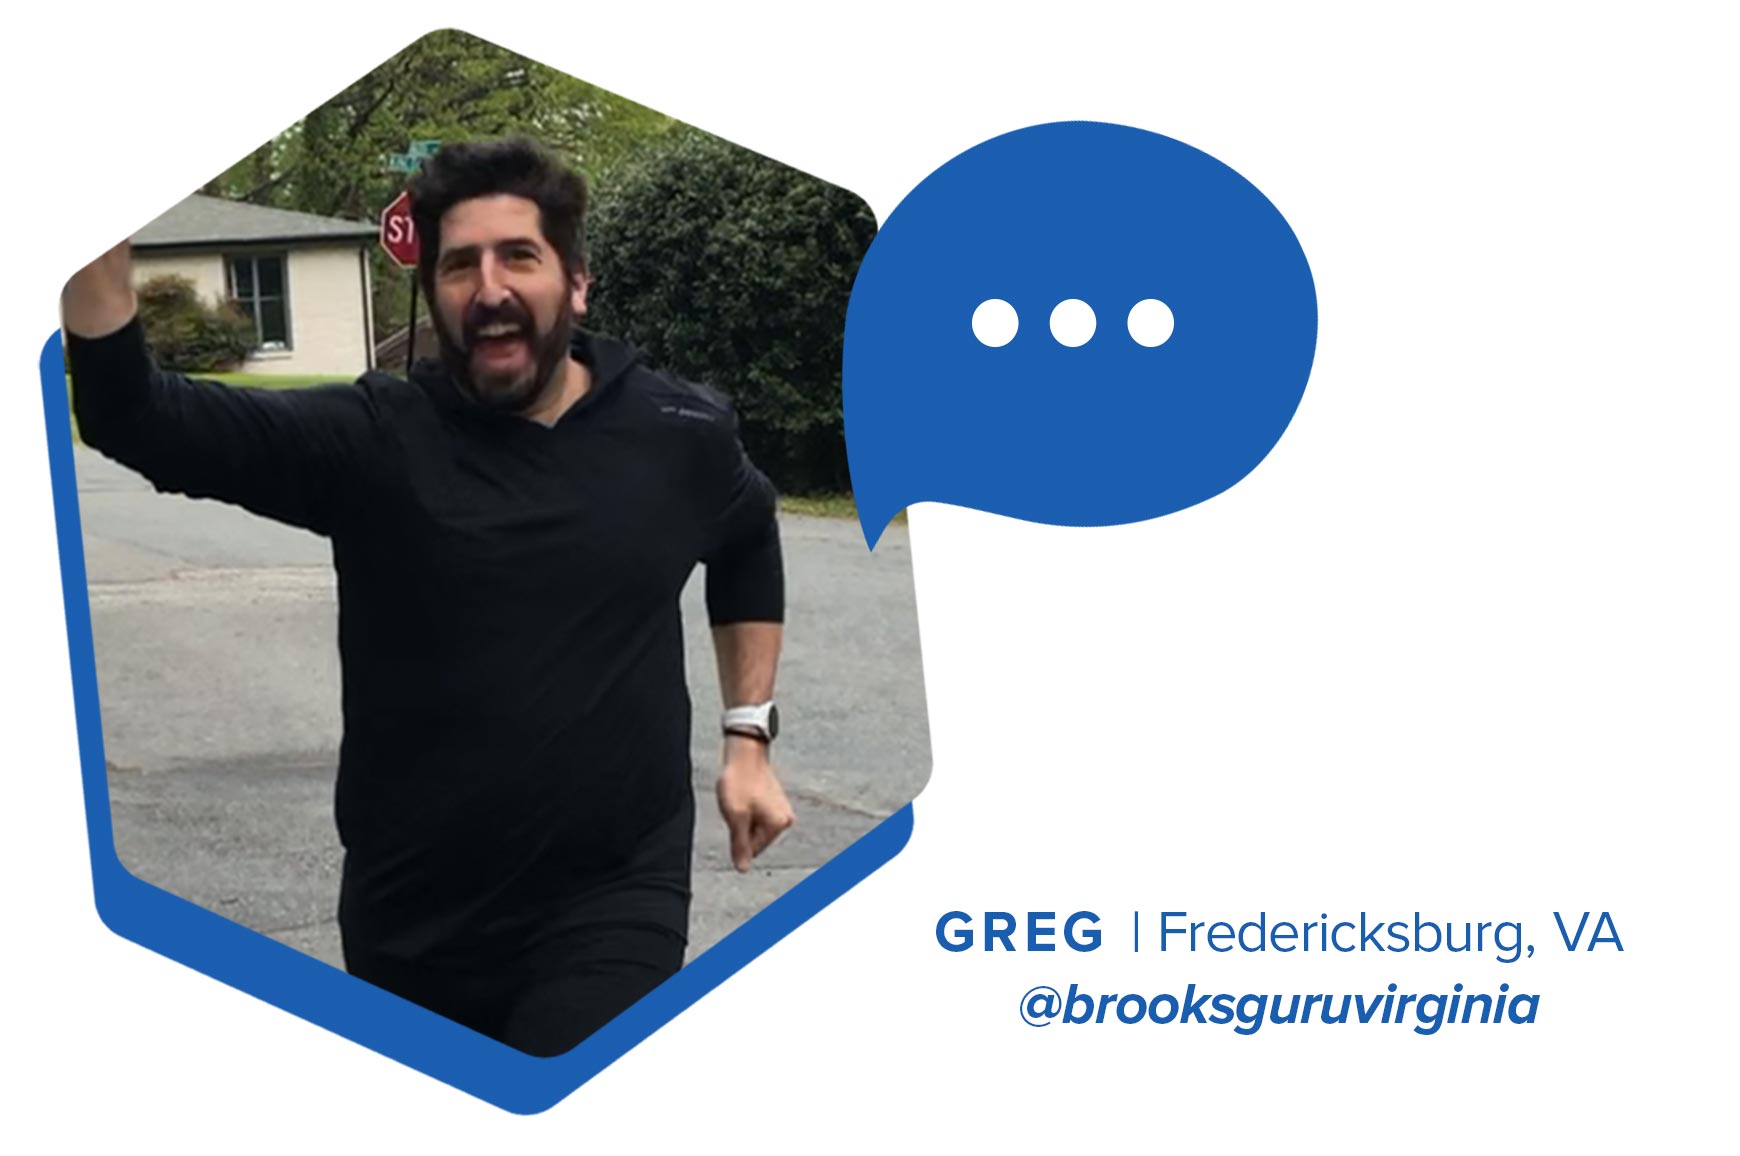 Greg on a run and text that reads 'Greg| Fredericksburg, VA | @brooksguruvirginia